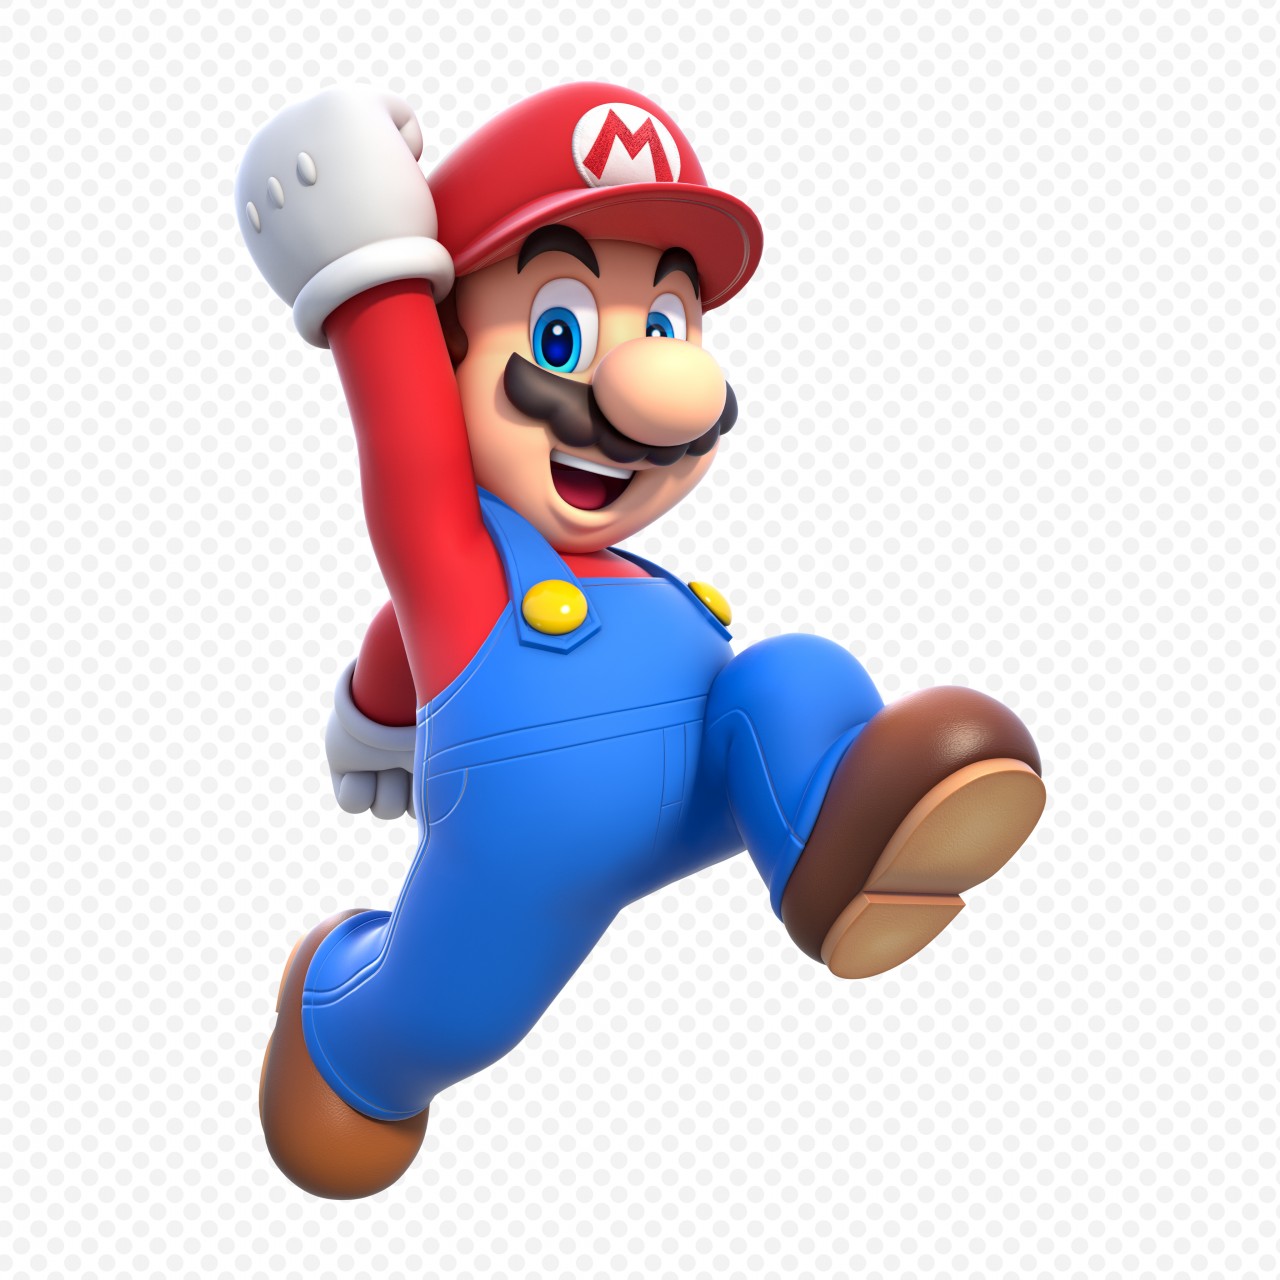 Super Mario jump drawing free image download